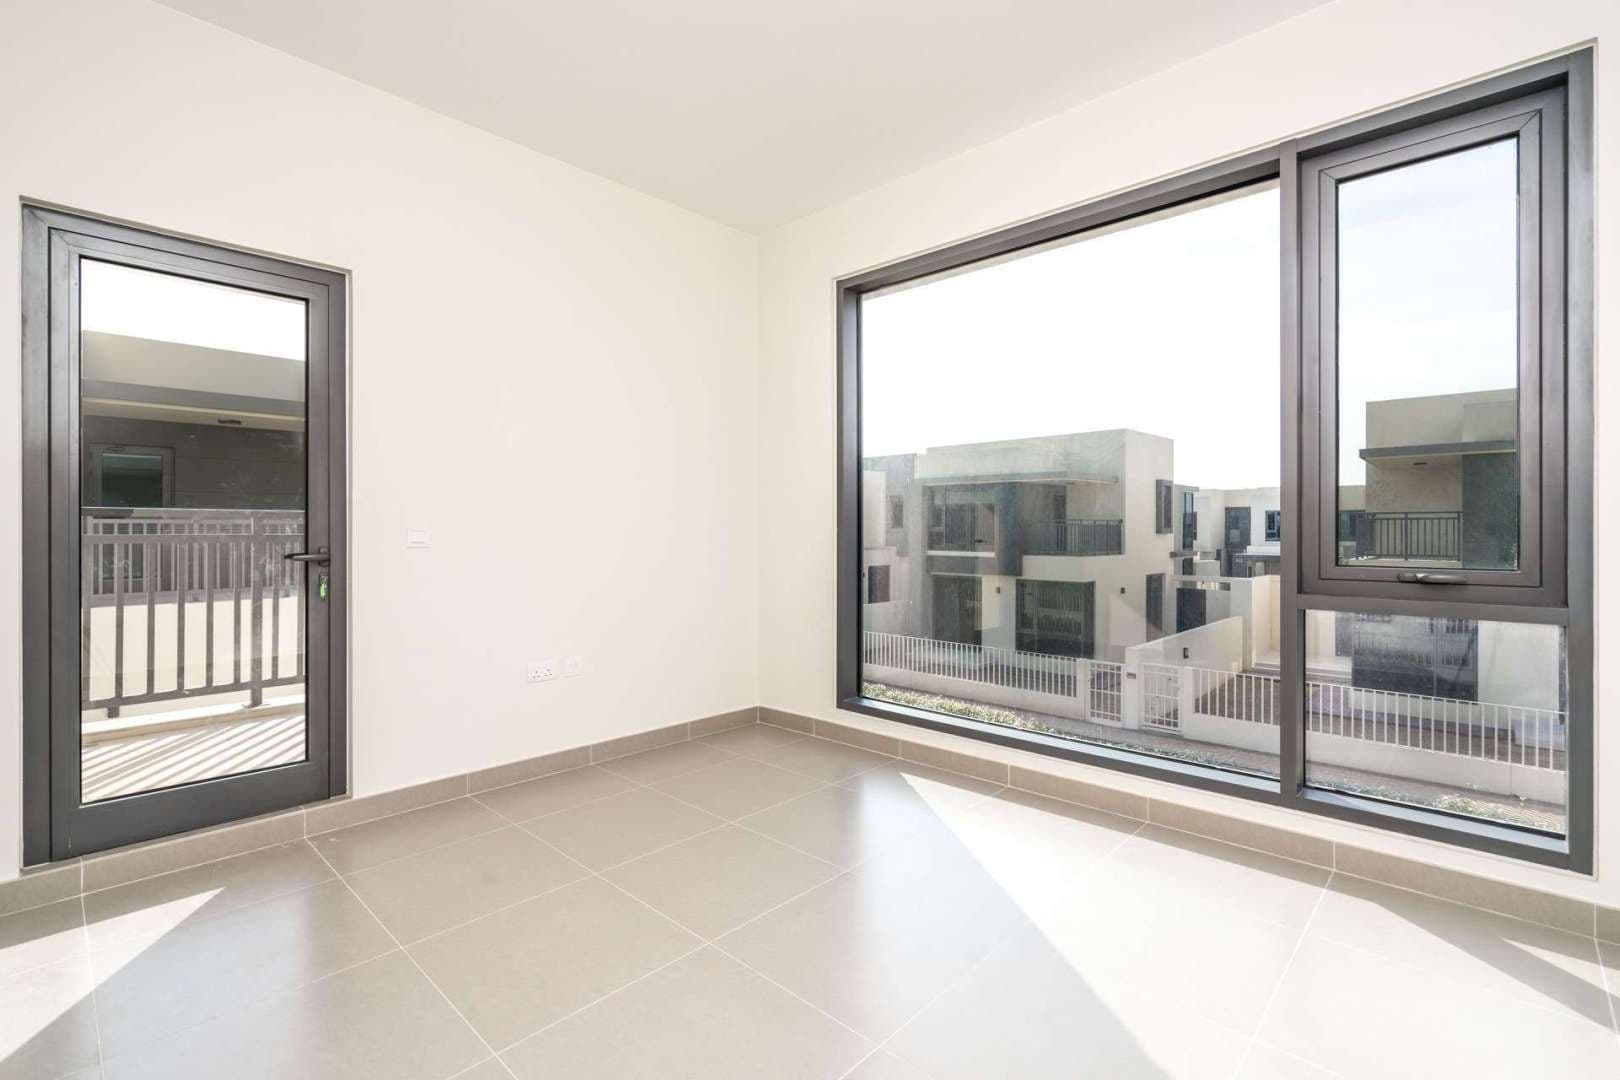 4 Bedroom Townhouse For Rent Maple At Dubai Hills Estate Lp08838 24084a479c203a00.jpg